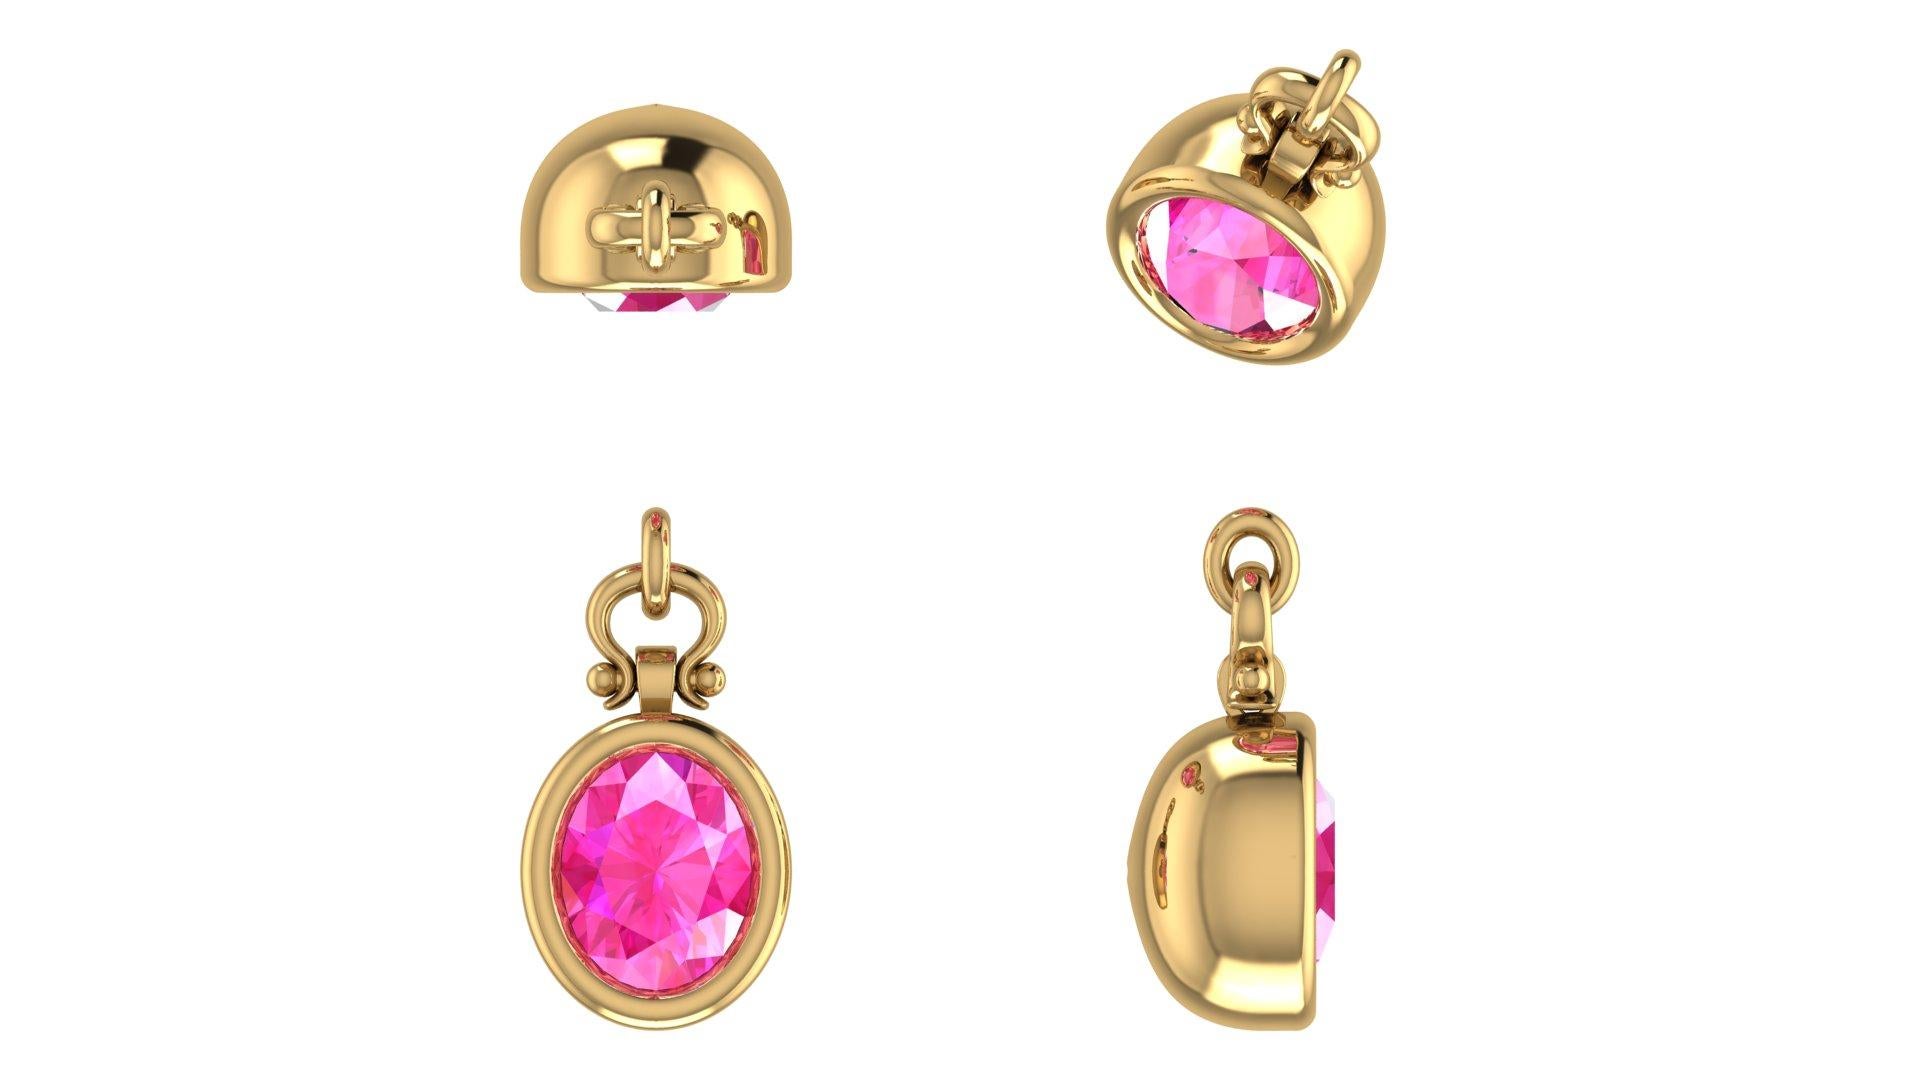 Emteem Certified 3.68 Carat Oval Pink Sapphire Pendant Necklace in 18K For Sale 1